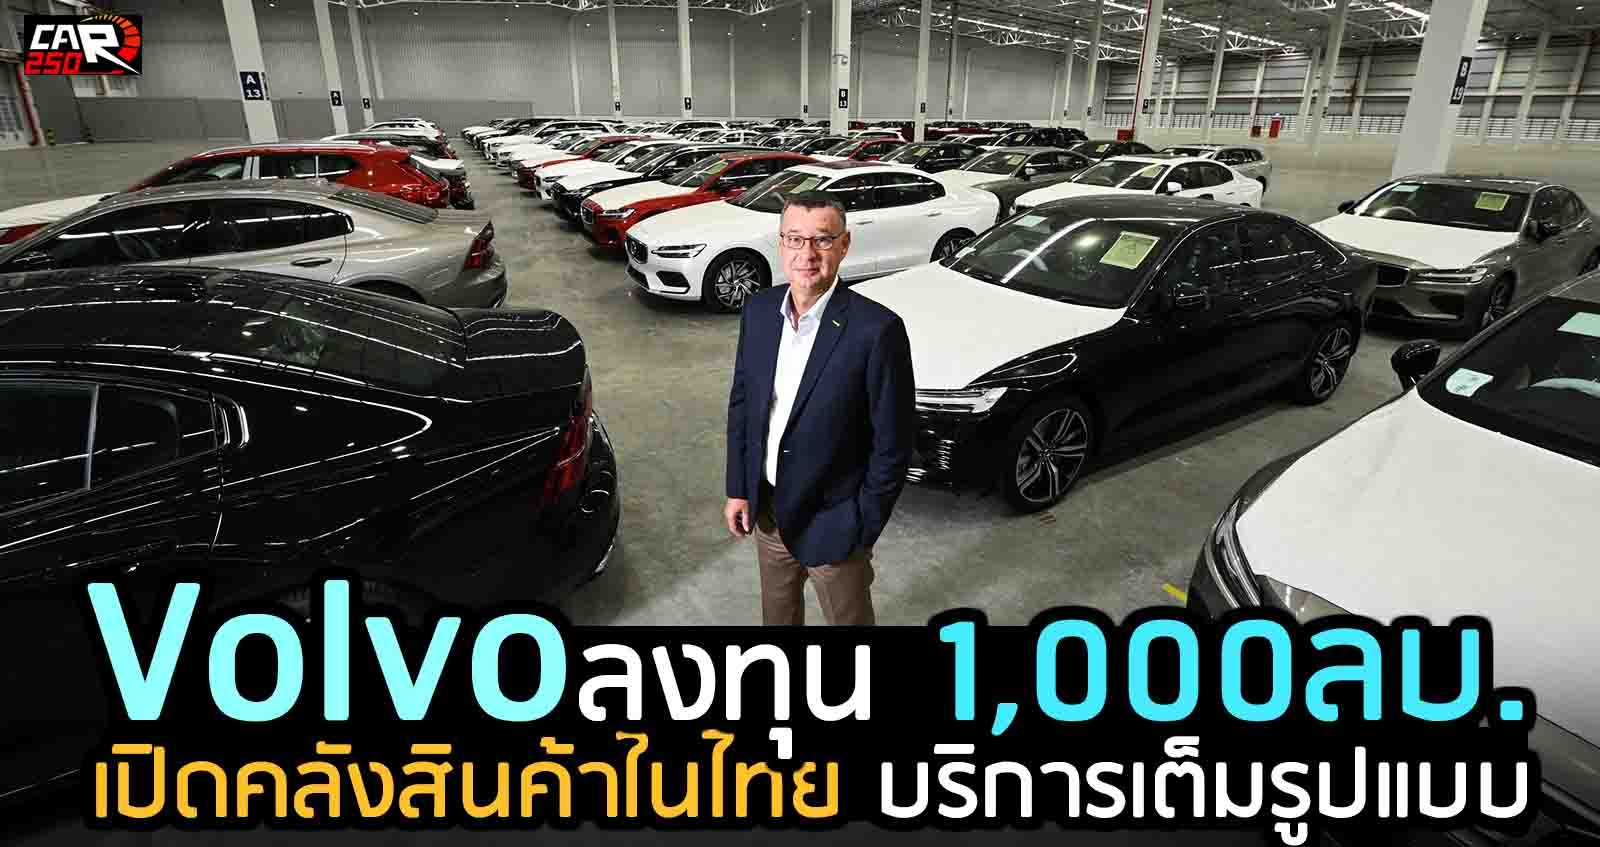 Volvo ลงทุน 1,000 ลบ. เปิดคลังสินค้าในไทย พร้อมบริการเต็มรูปแบบ